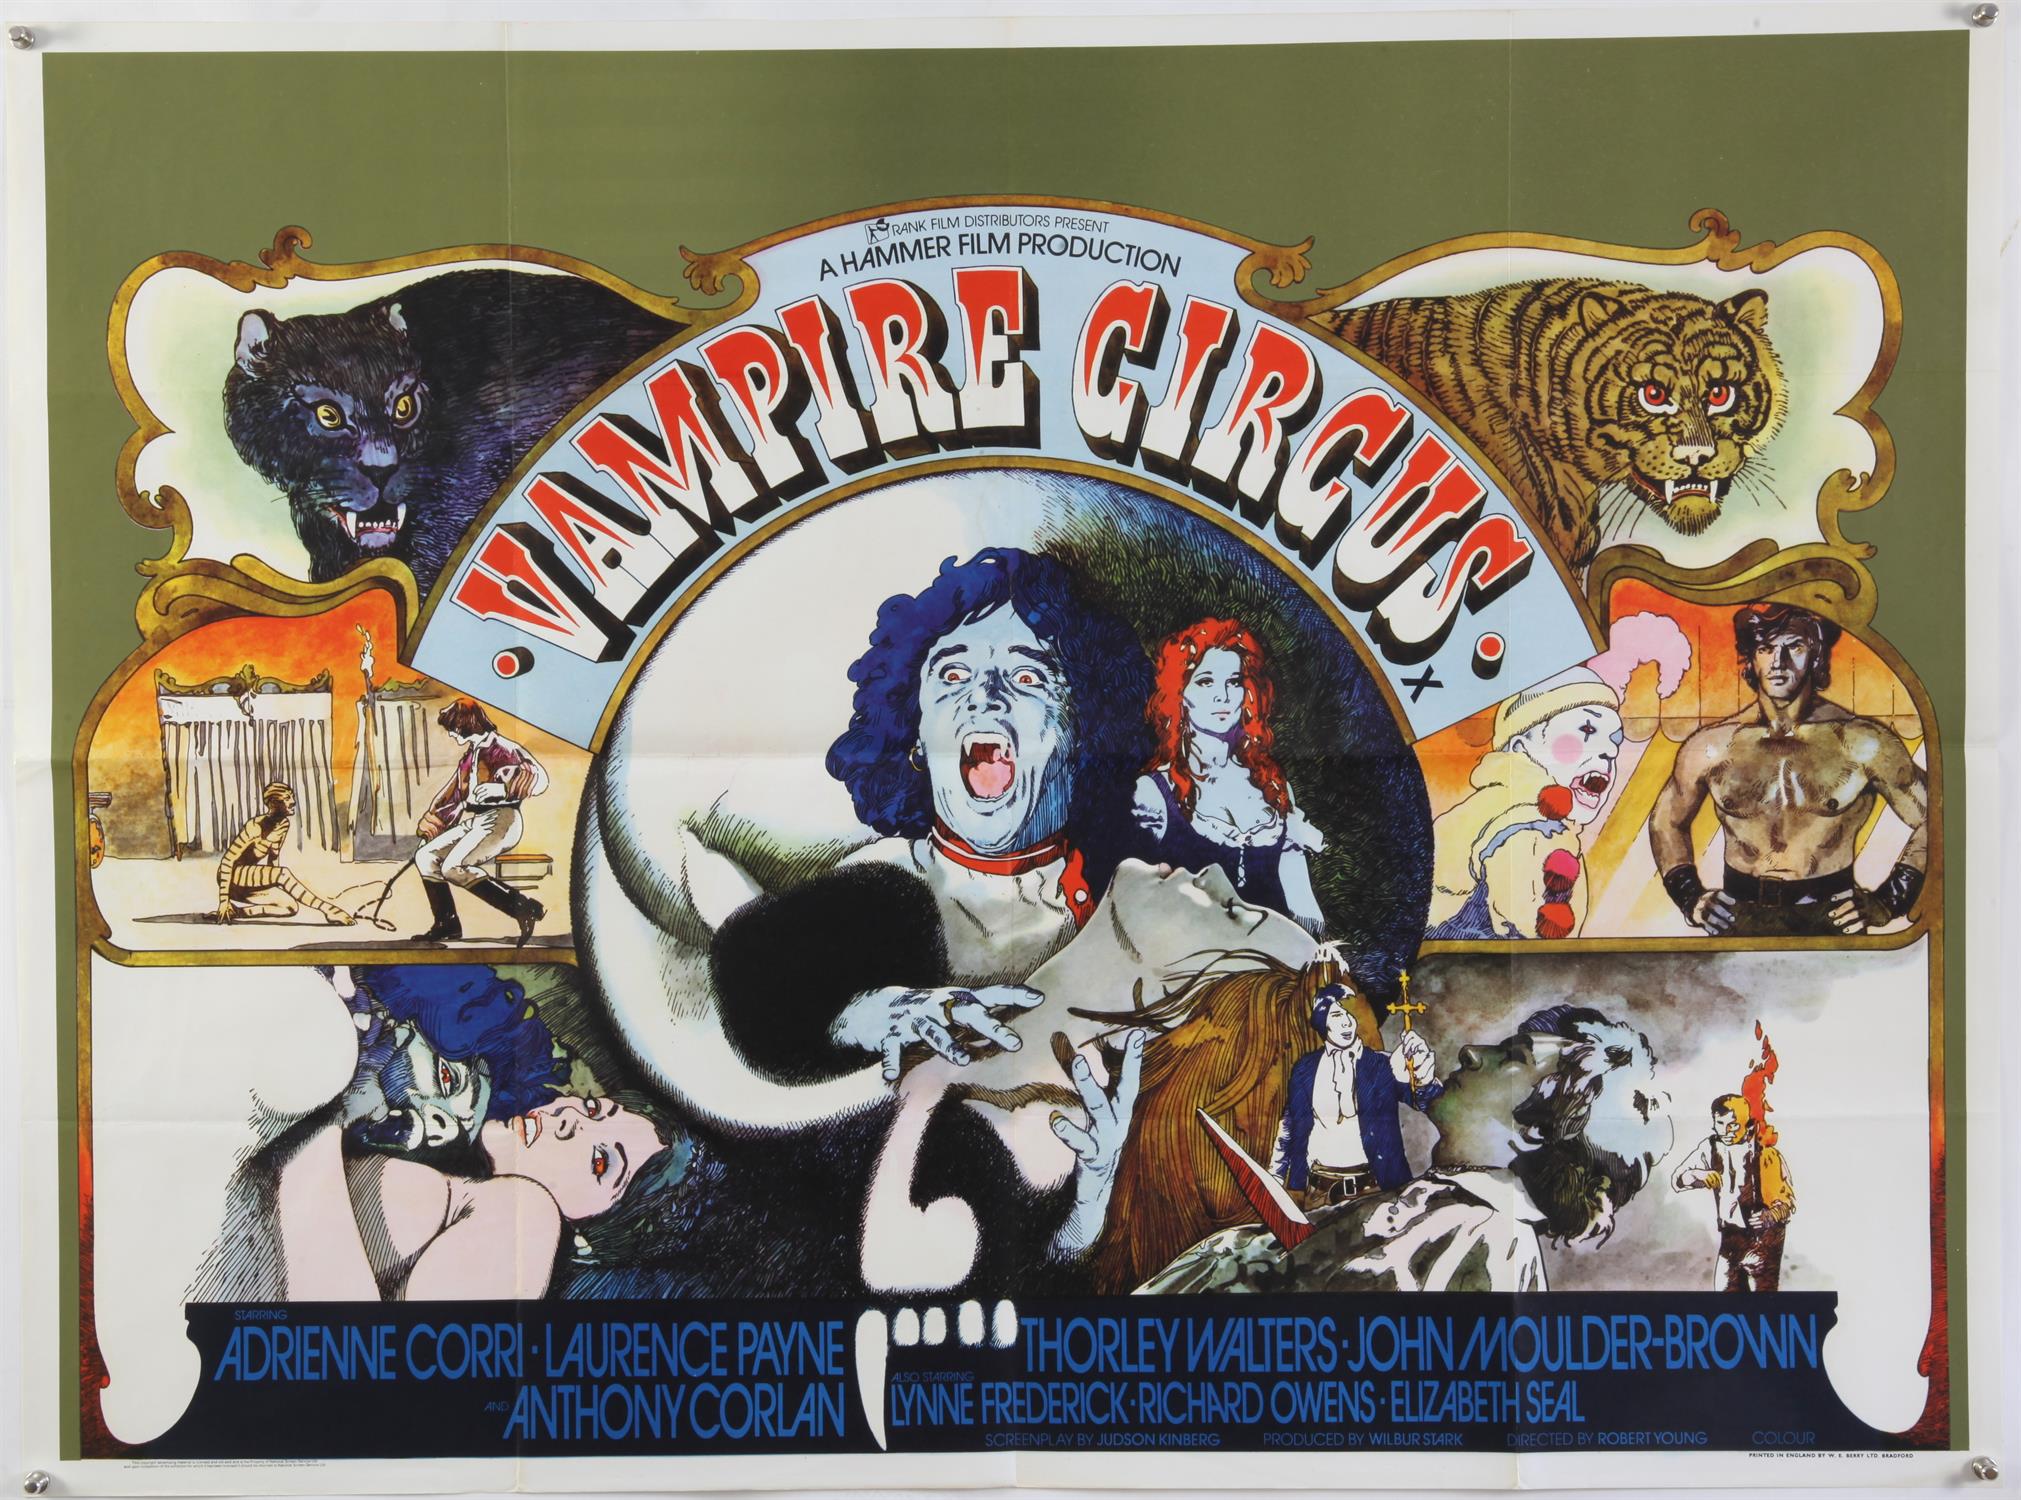 Vampire Circus (1972) British Quad film poster for the Hammer horror film featuring the infamous